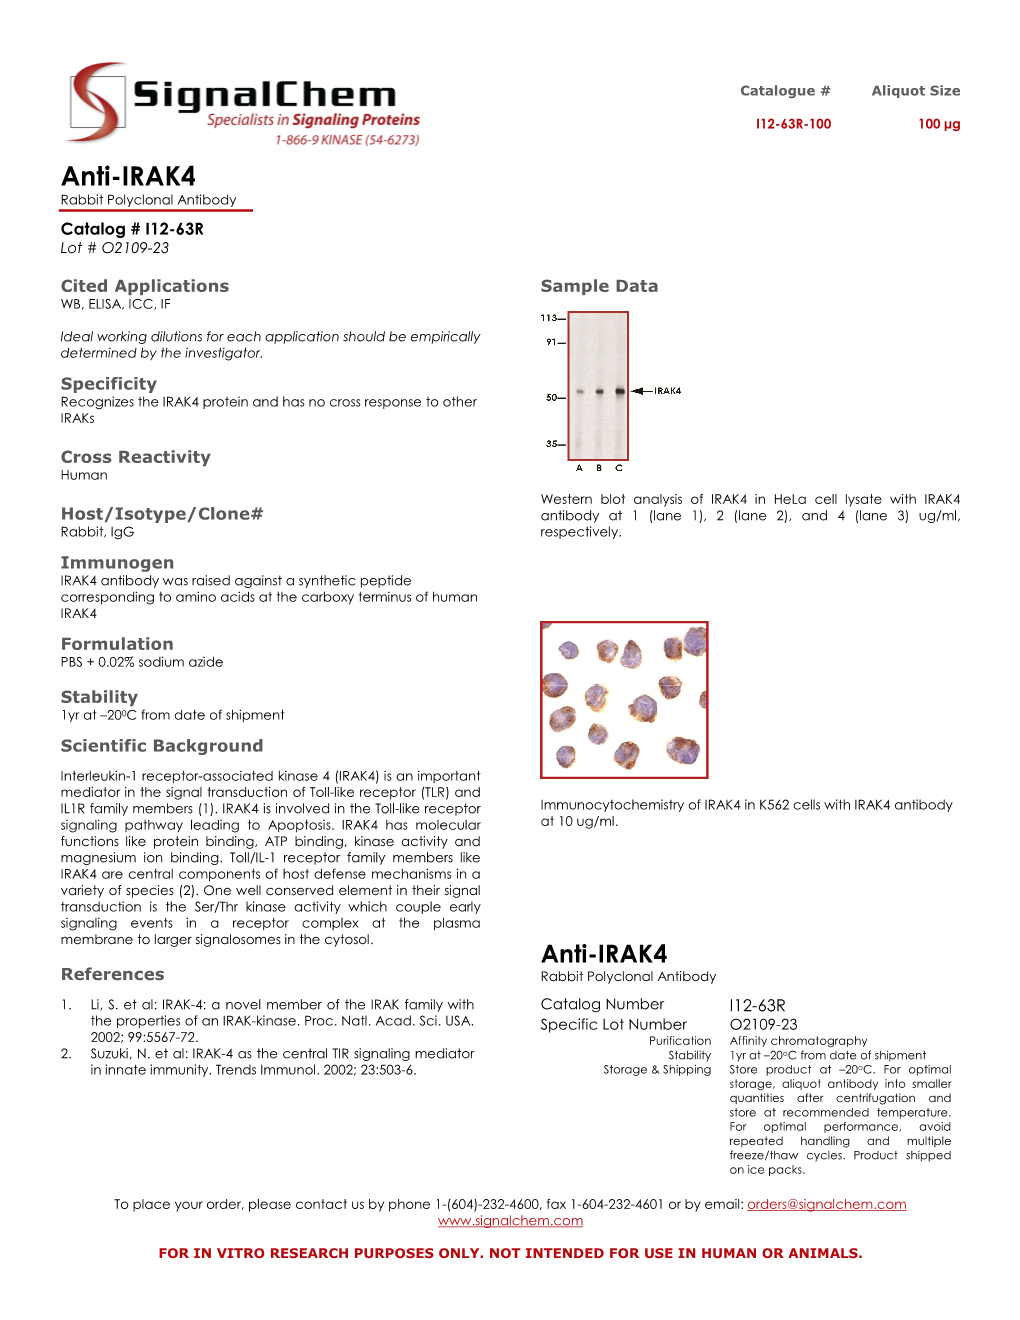 Anti-IRAK4 Rabbit Polyclonal Antibody